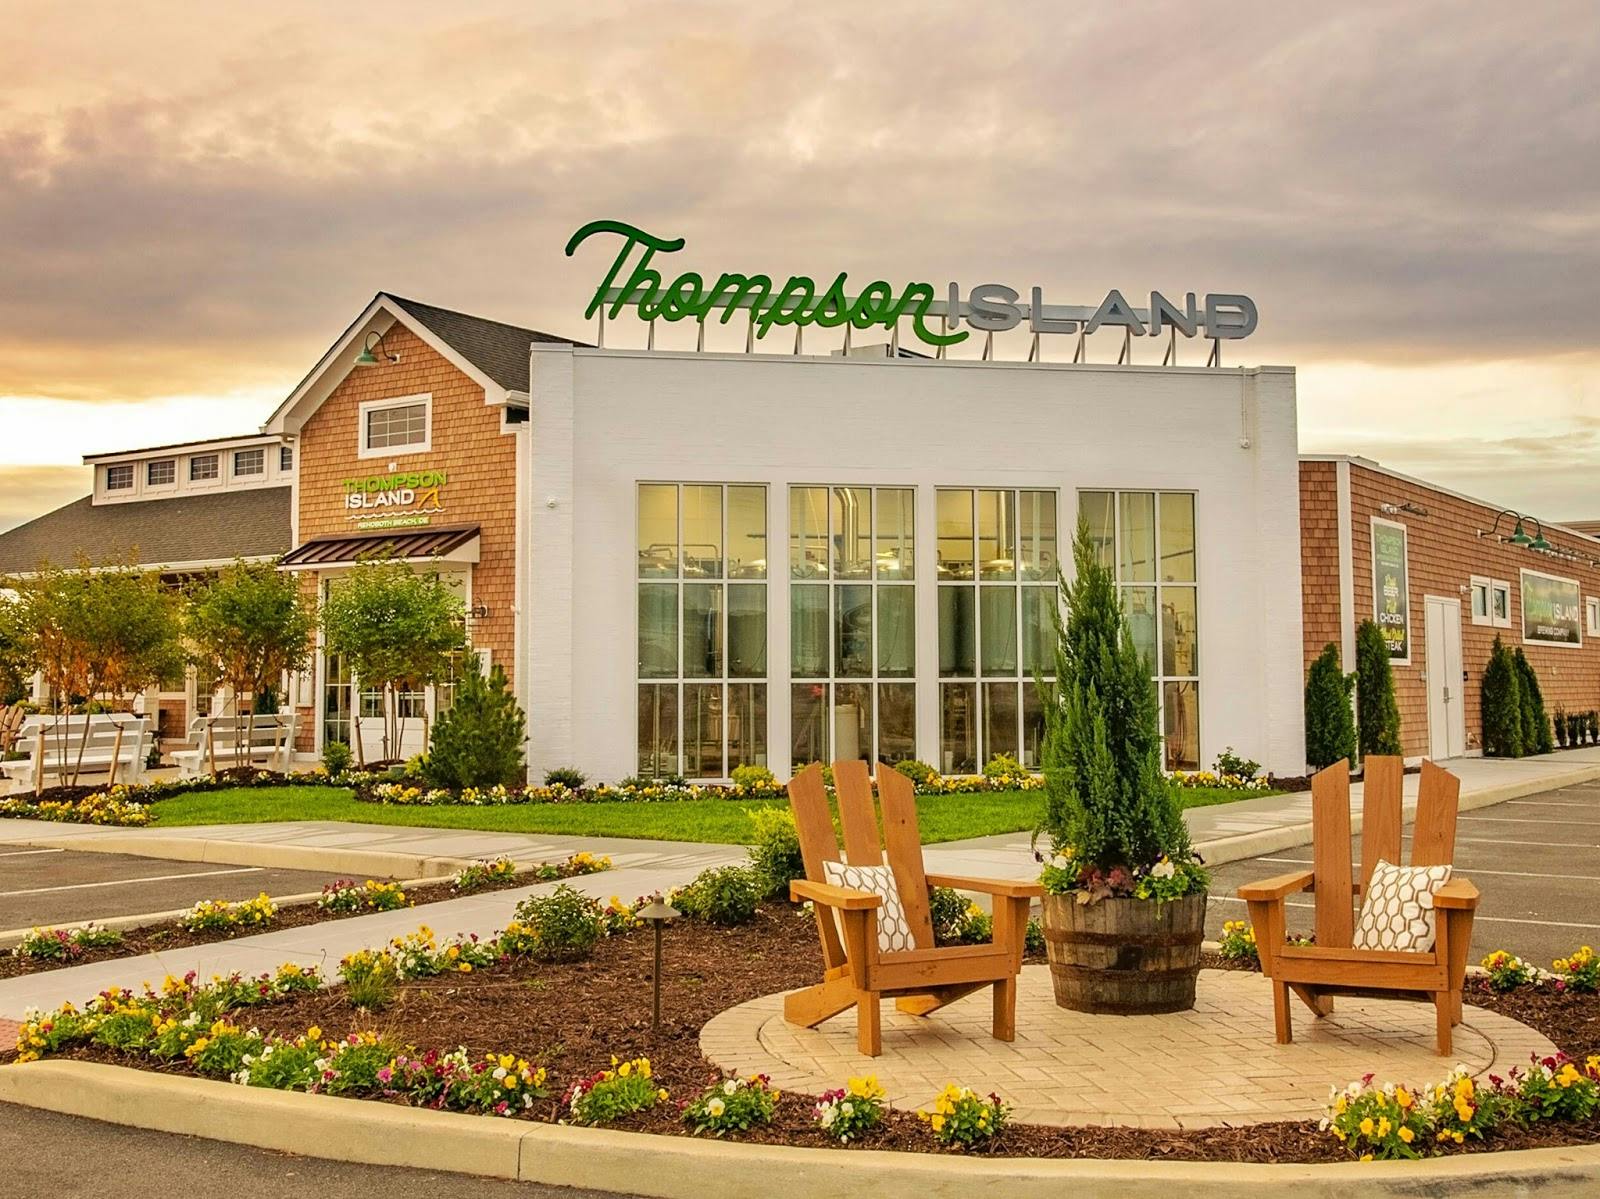 Image - Thompson Island Brewing Company